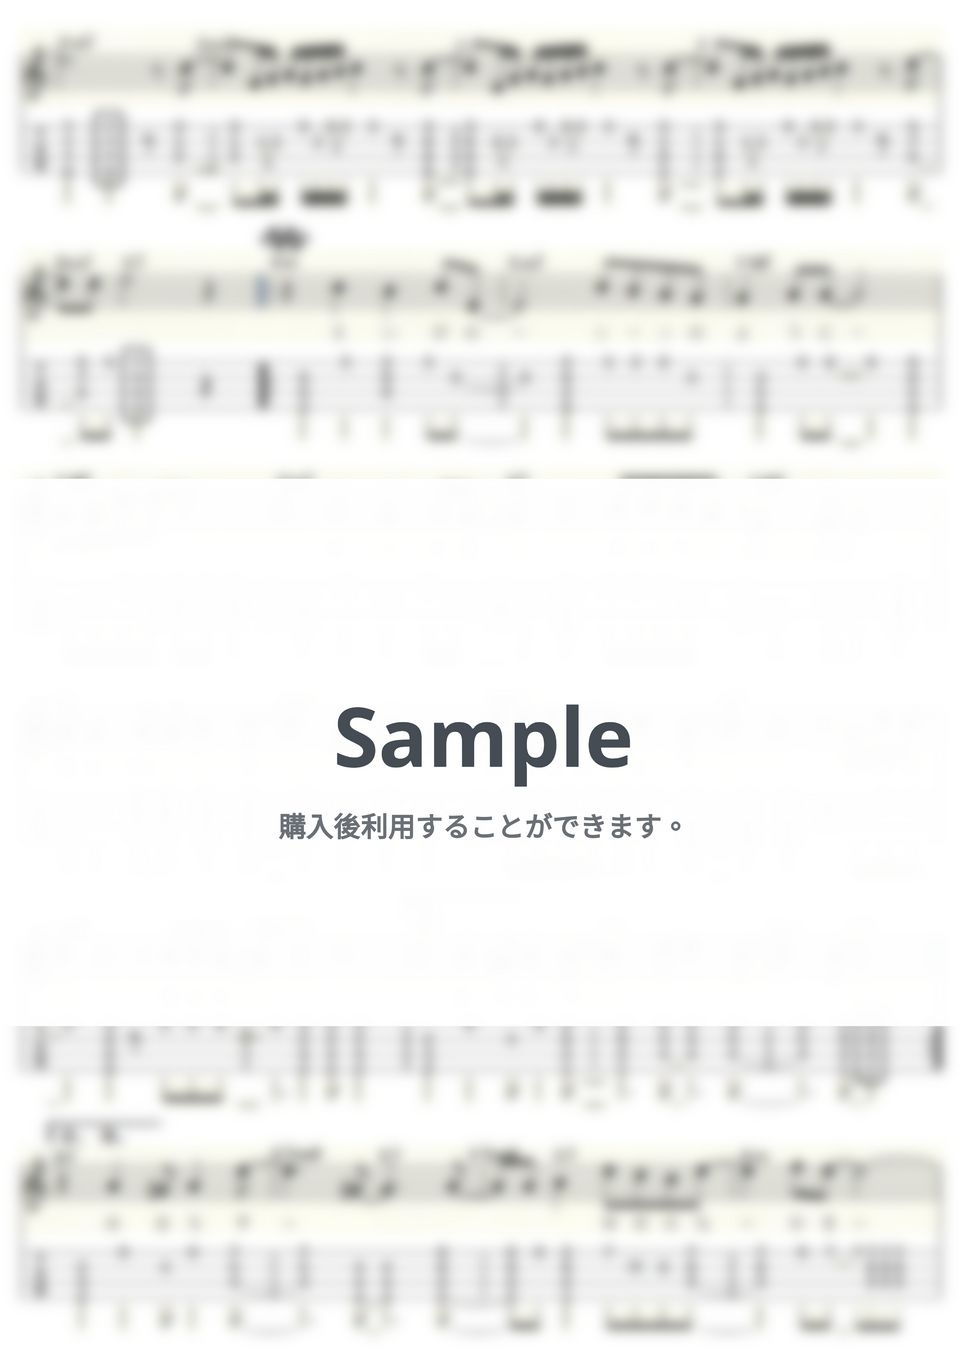 中森明菜 - 北ウィング (ｳｸﾚﾚｿﾛ/High-G・Low-G/中級～上級) by ukulelepapa